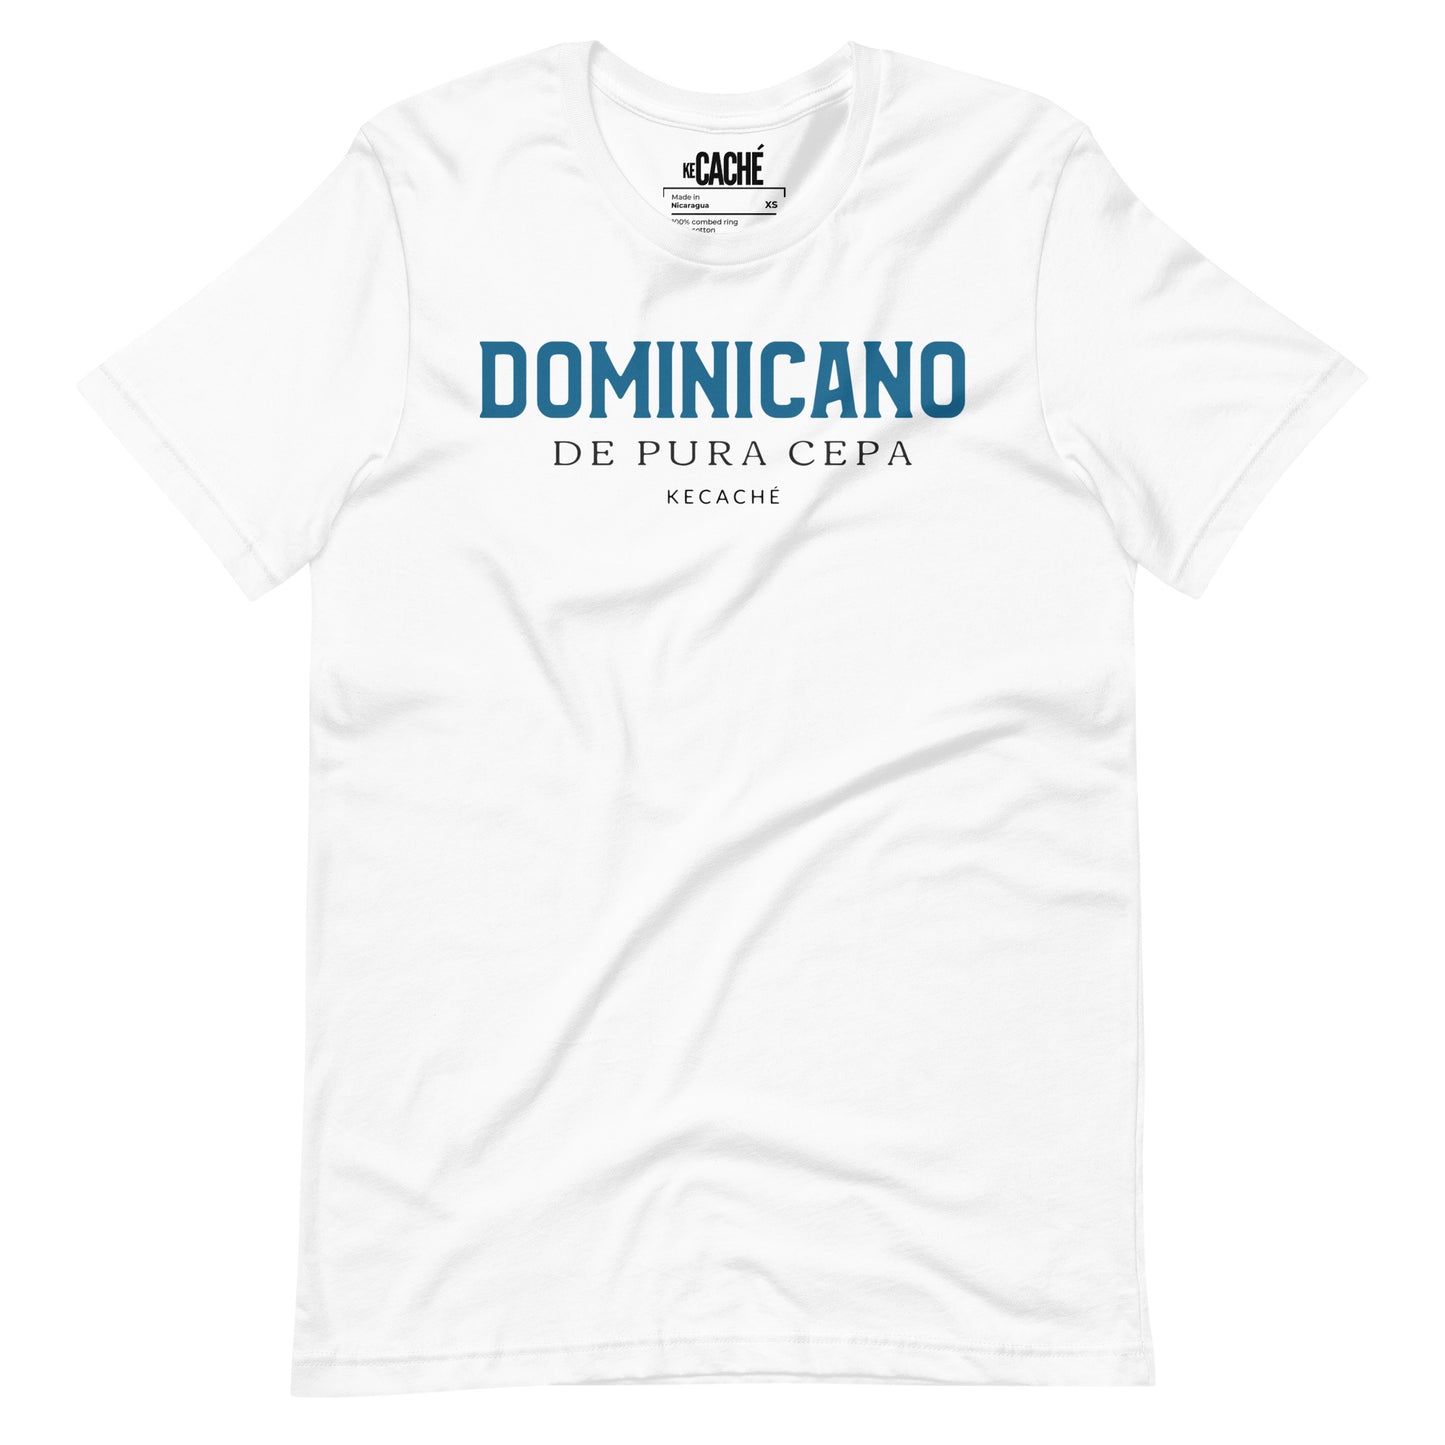 KeCaché "Dominicano de Pura Cepa" White T-Shirt - Embrace Your Dominican Heritage